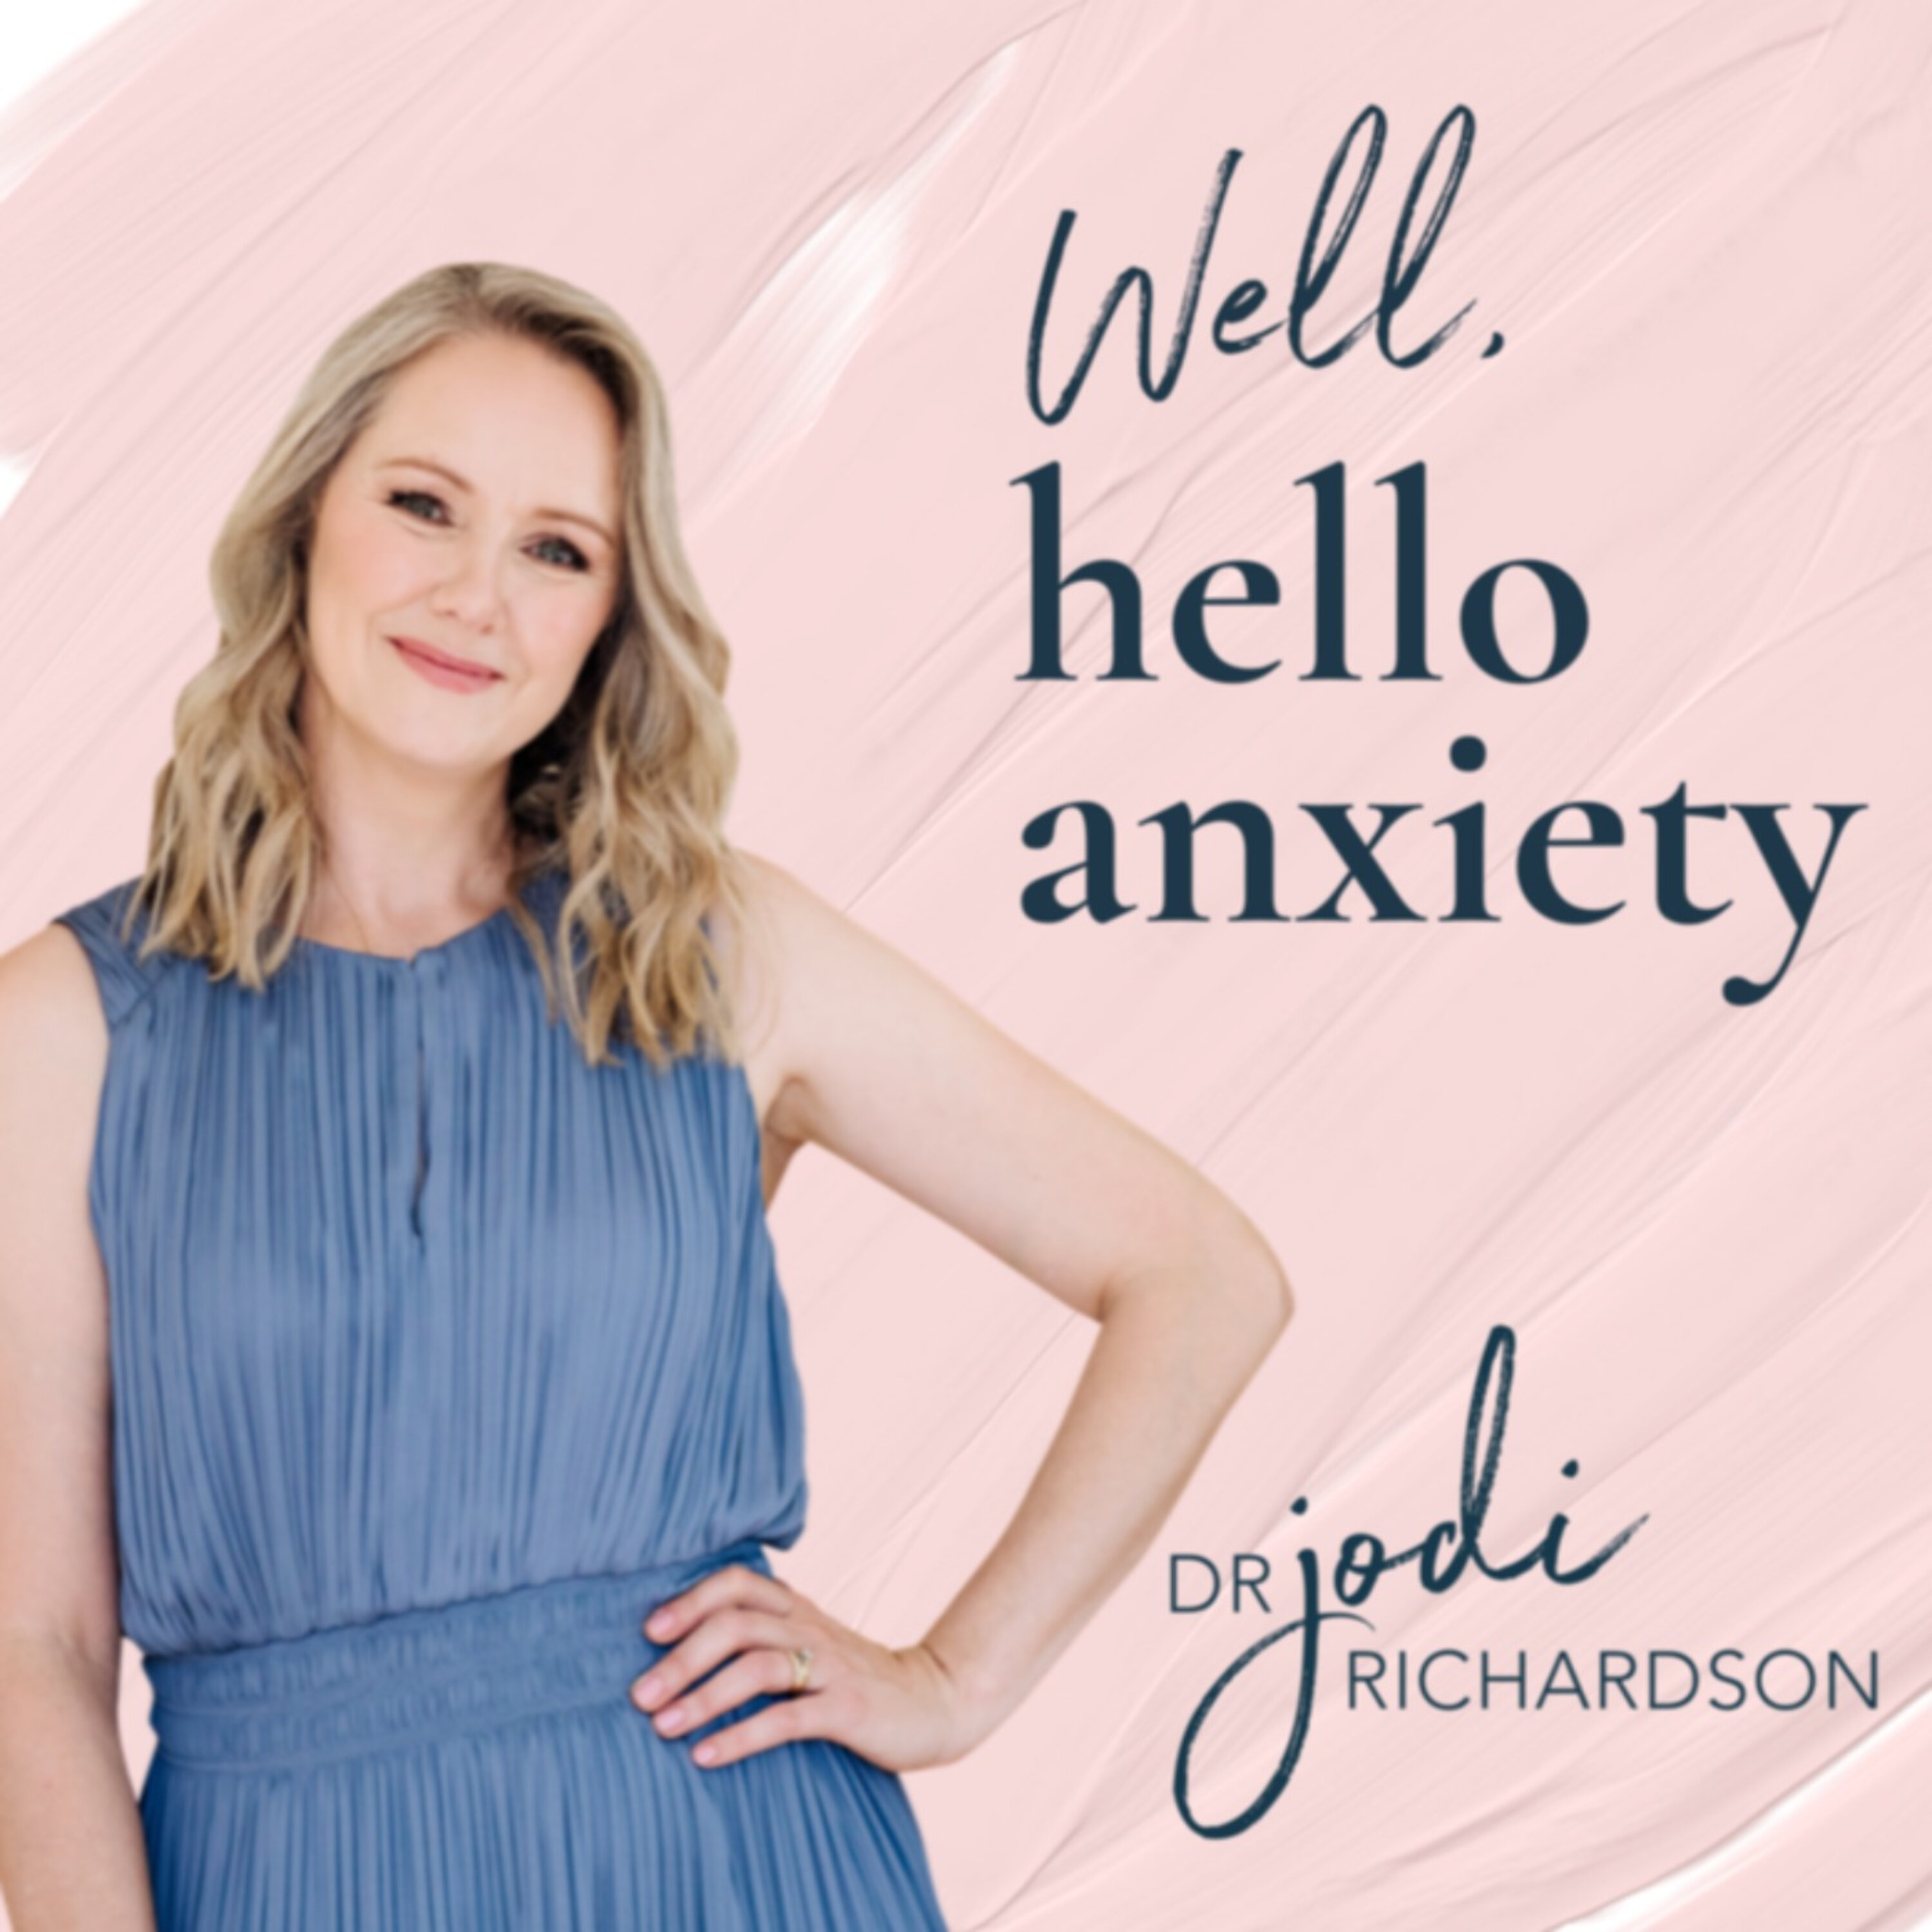 Well, hello anxiety with Dr Jodi Richardson:Dr Jodi Richardson